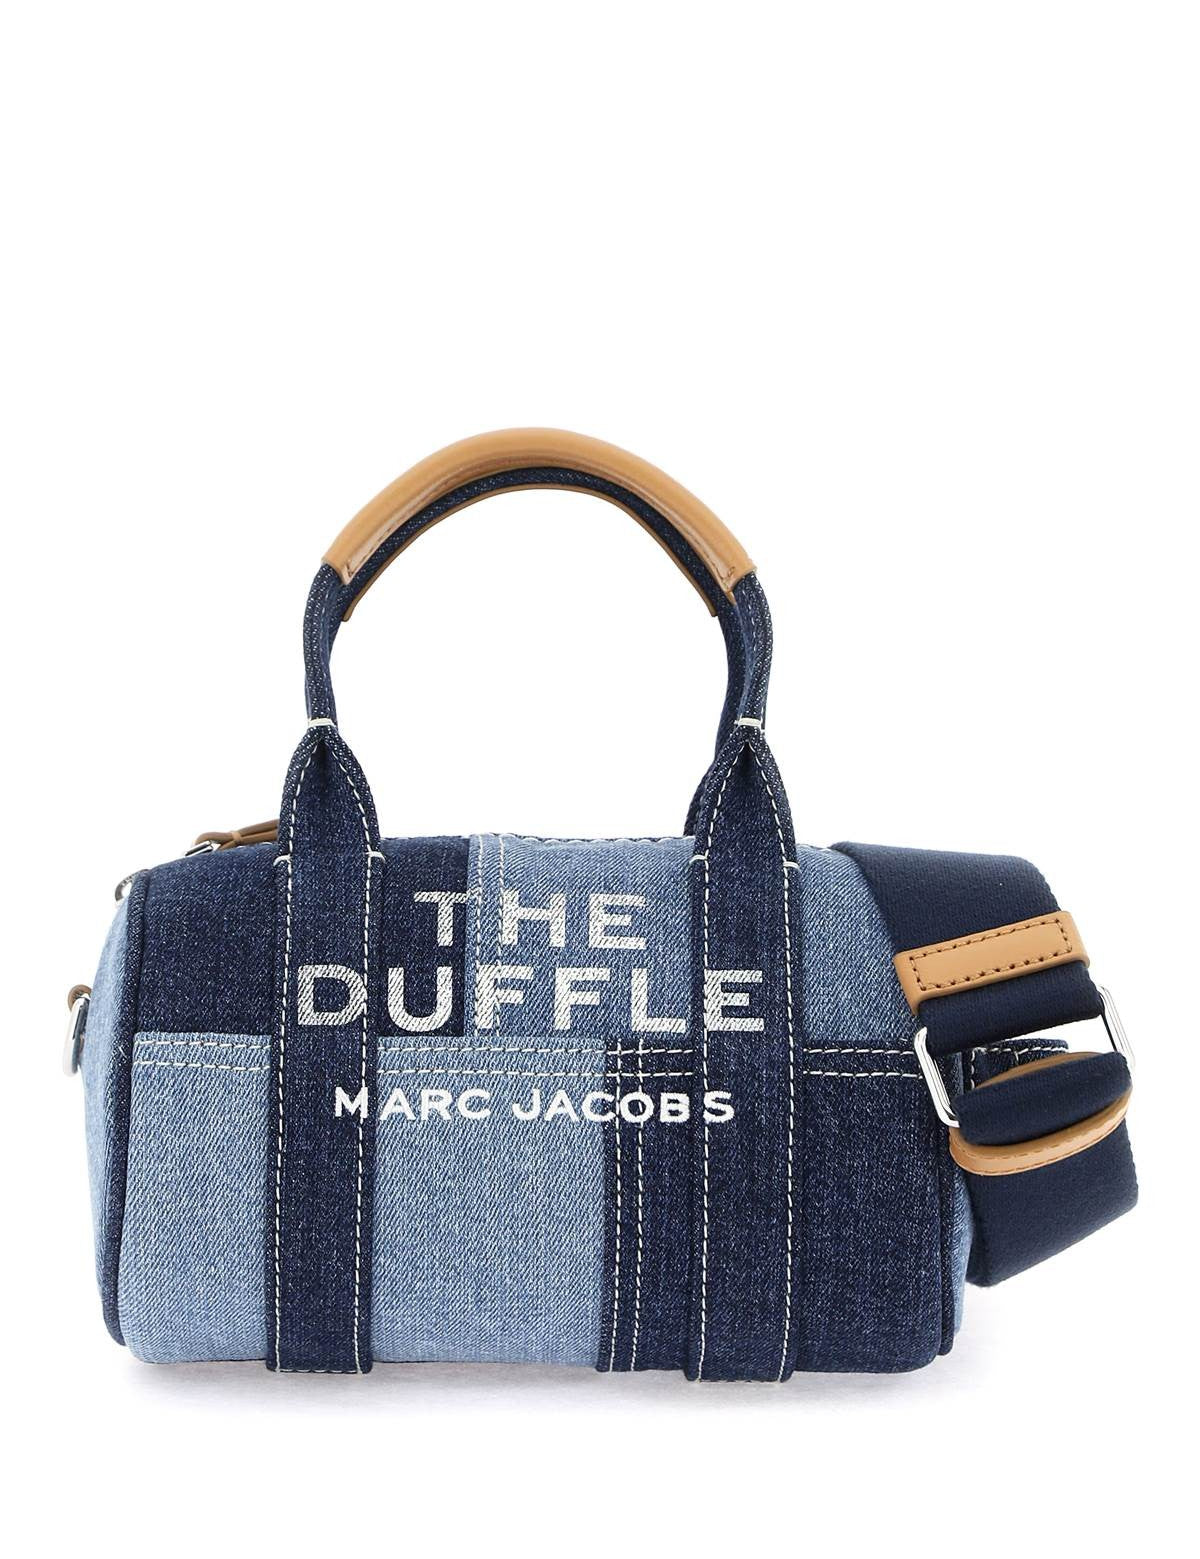 marc-jacobs-the-denim-mini-duffle-bag.jpg